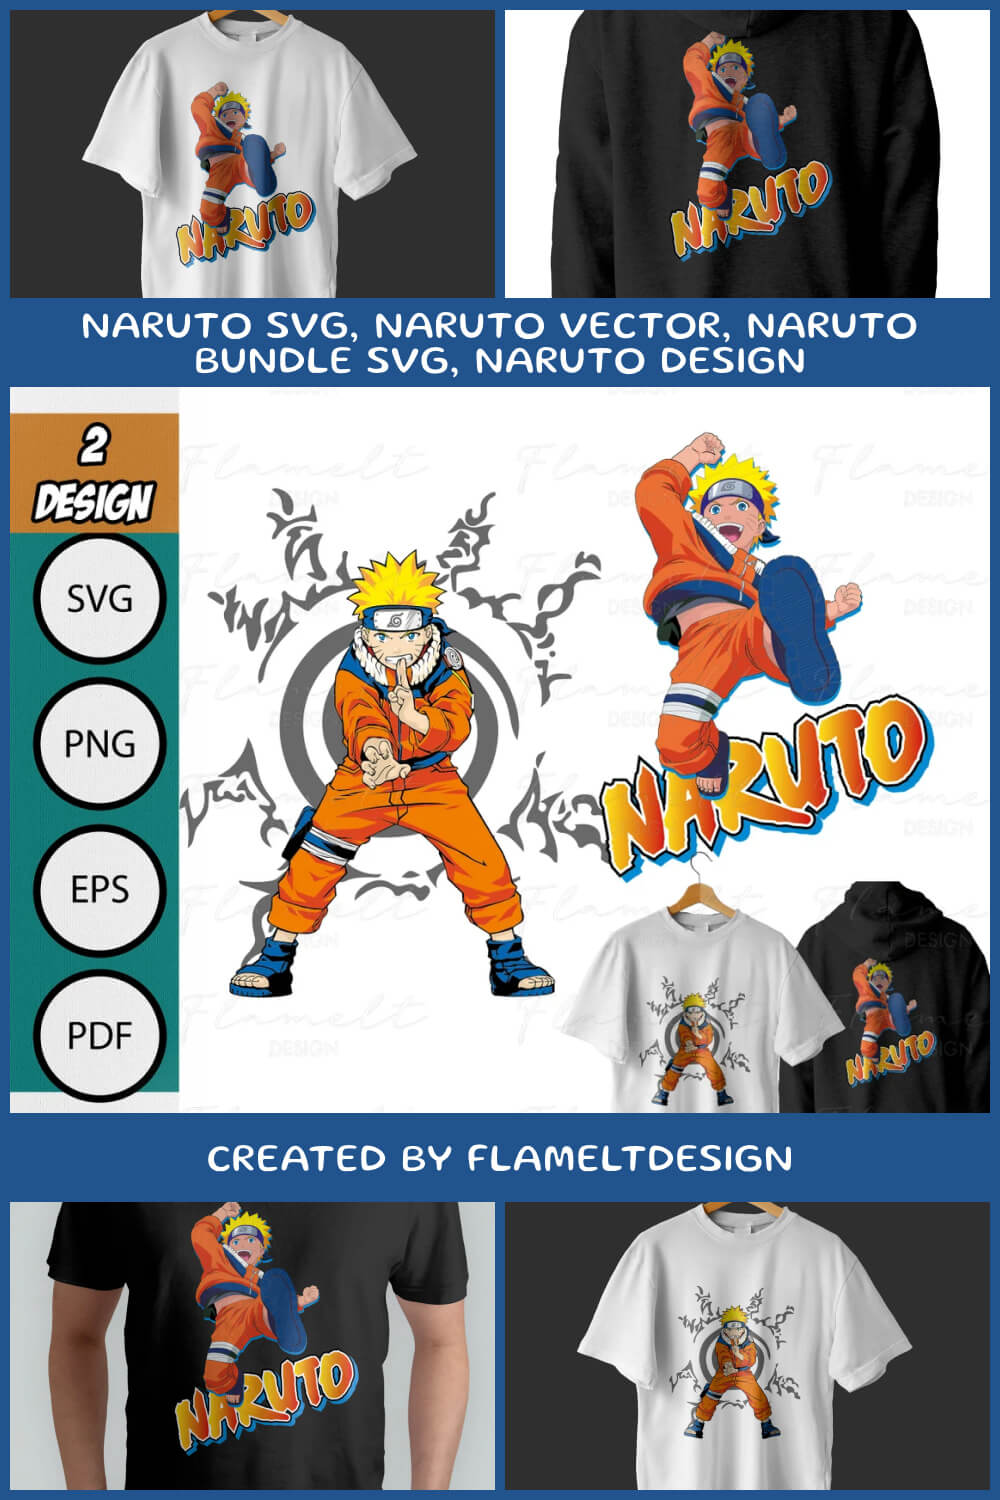 Naruto SVG, Naruto Vector.